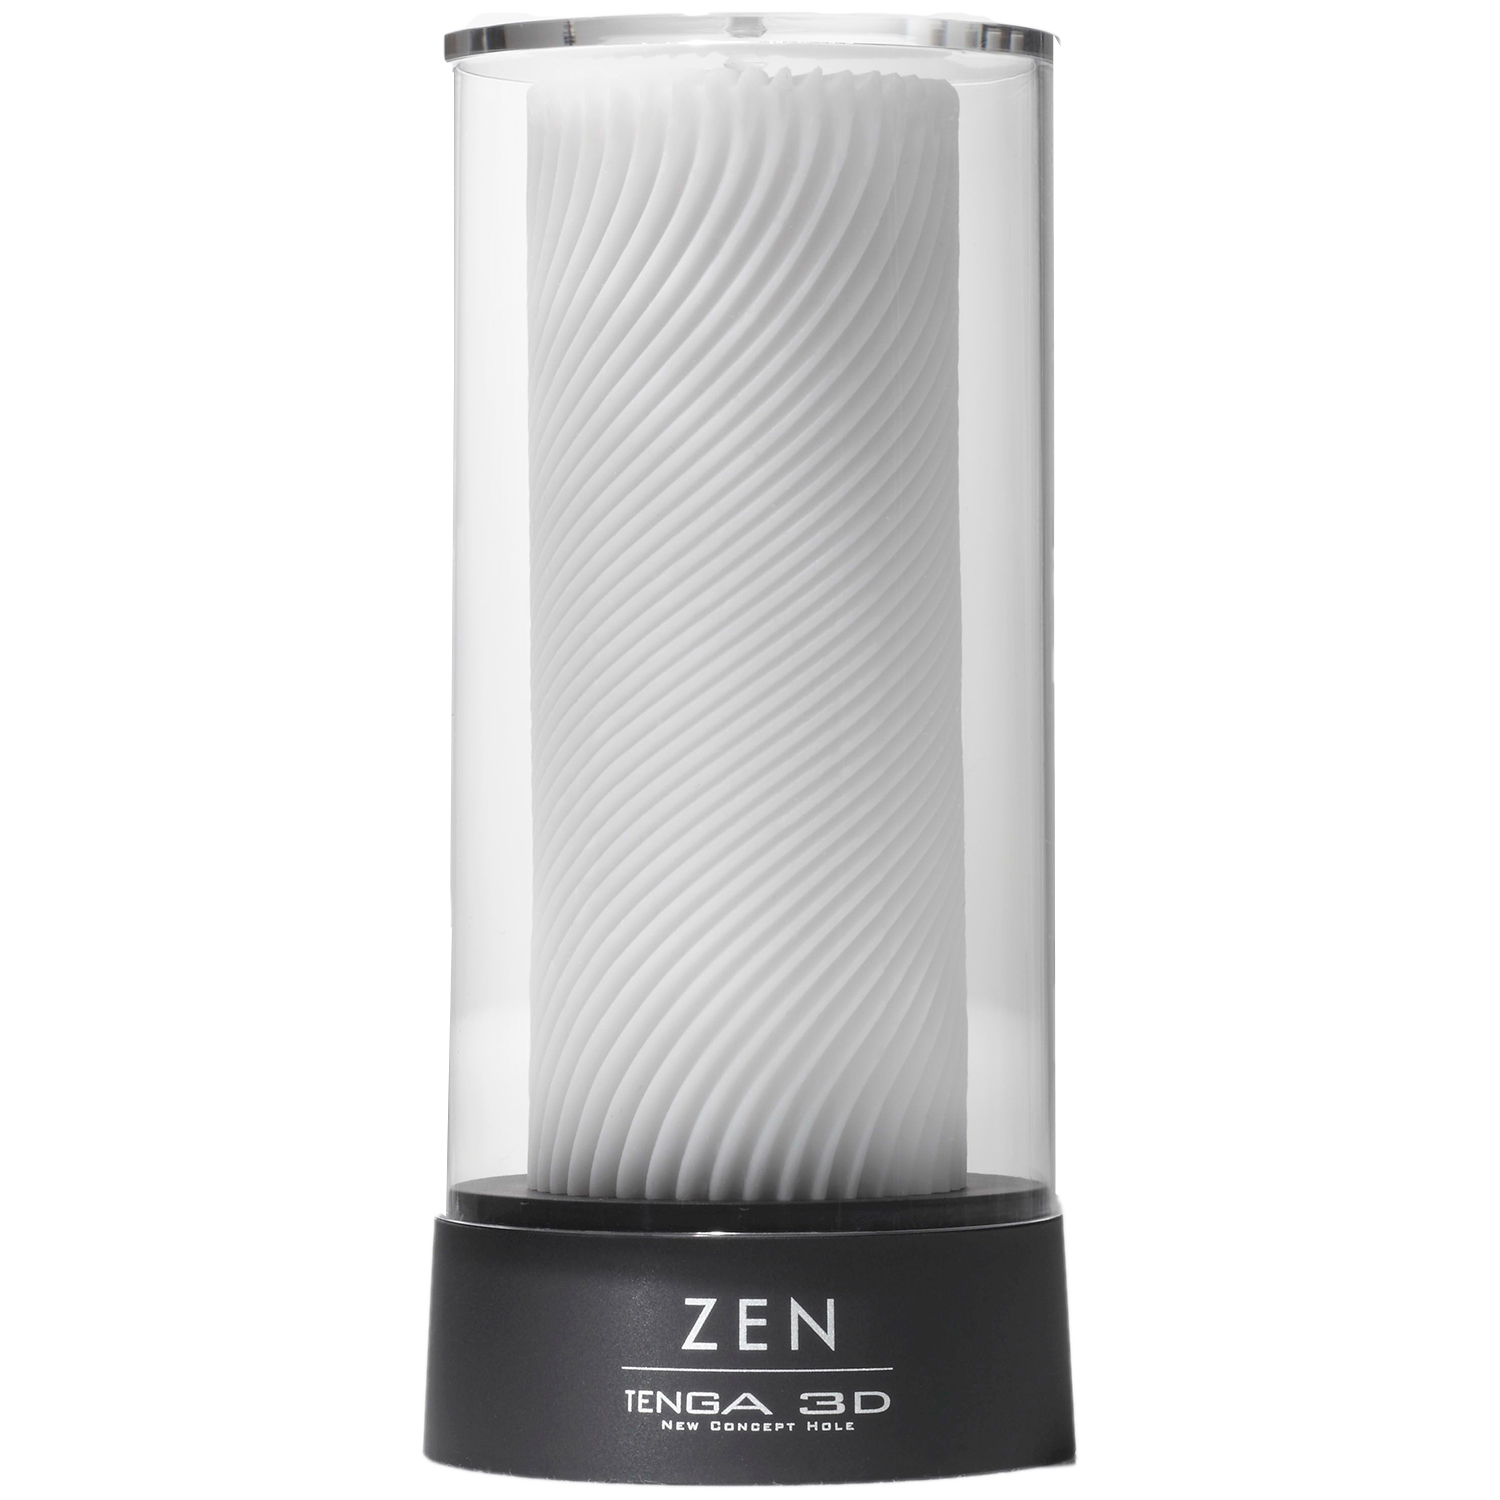 TENGA 3D Zen Onaniprodukt - Hvid